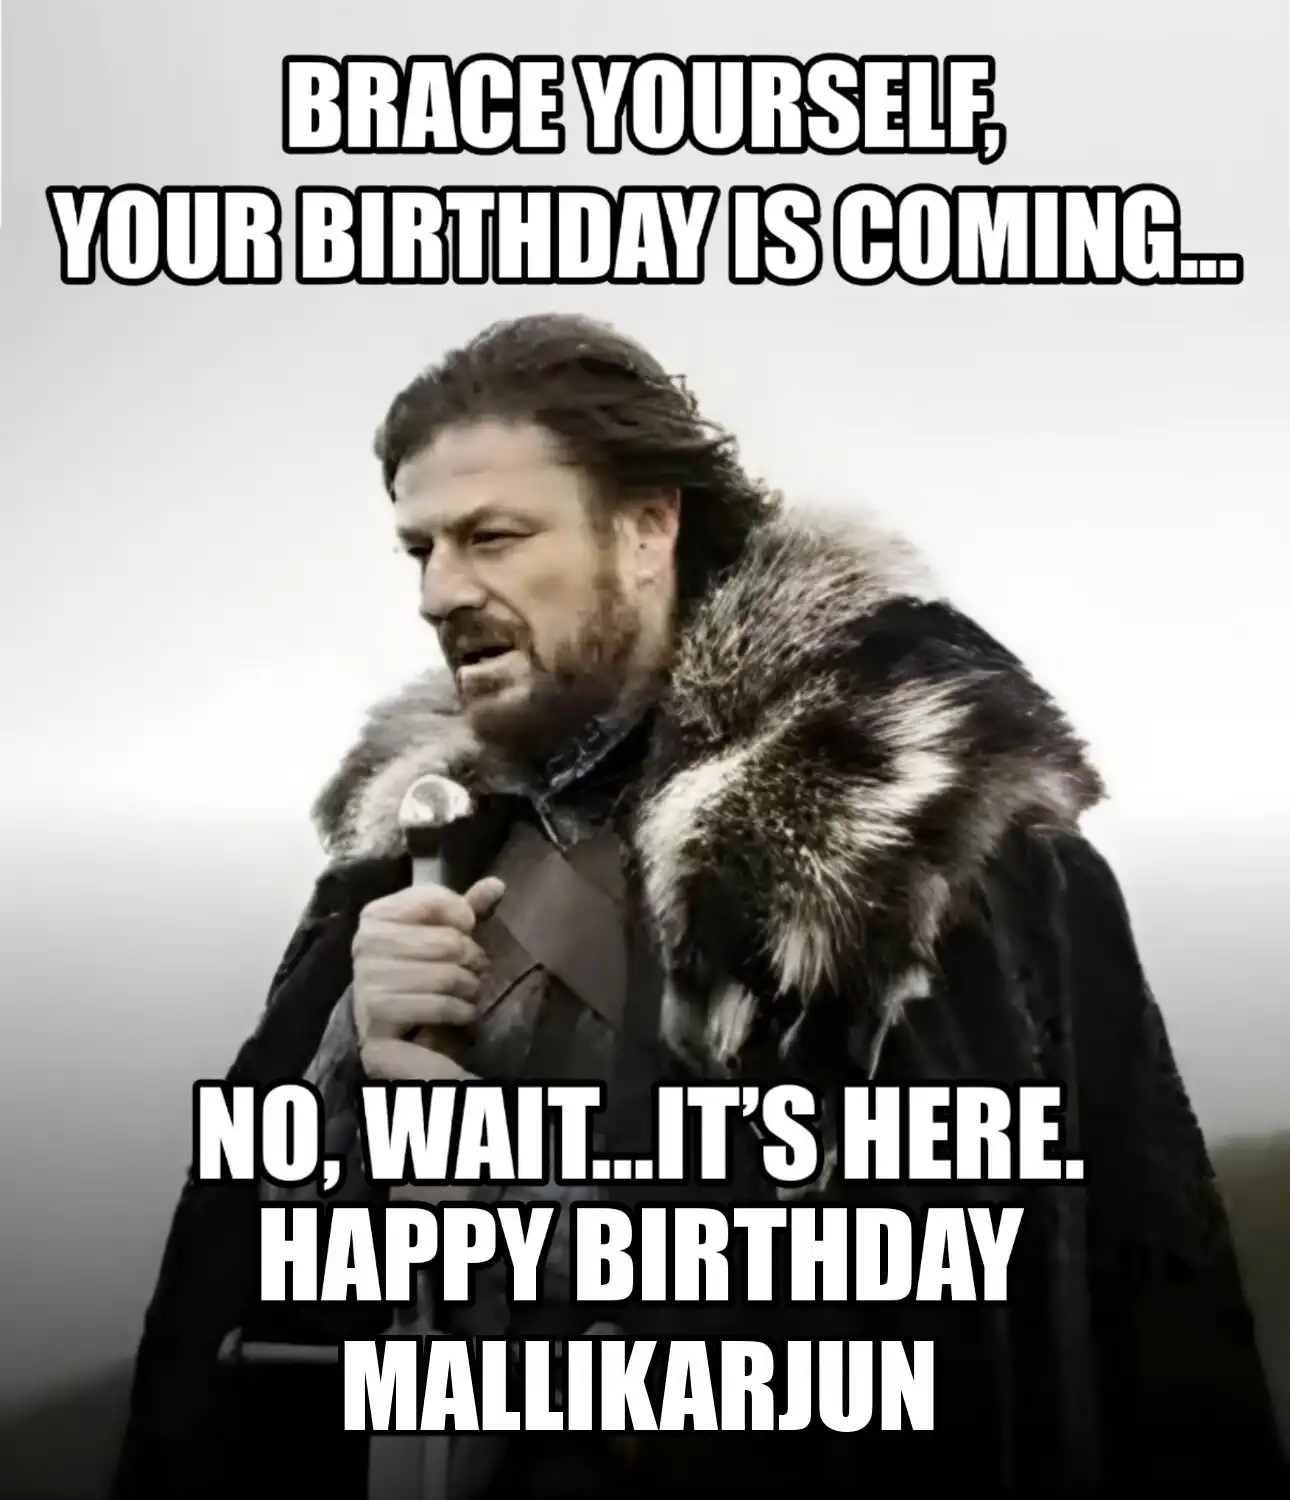 Happy Birthday Mallikarjun Brace Yourself Your Birthday Is Coming Meme